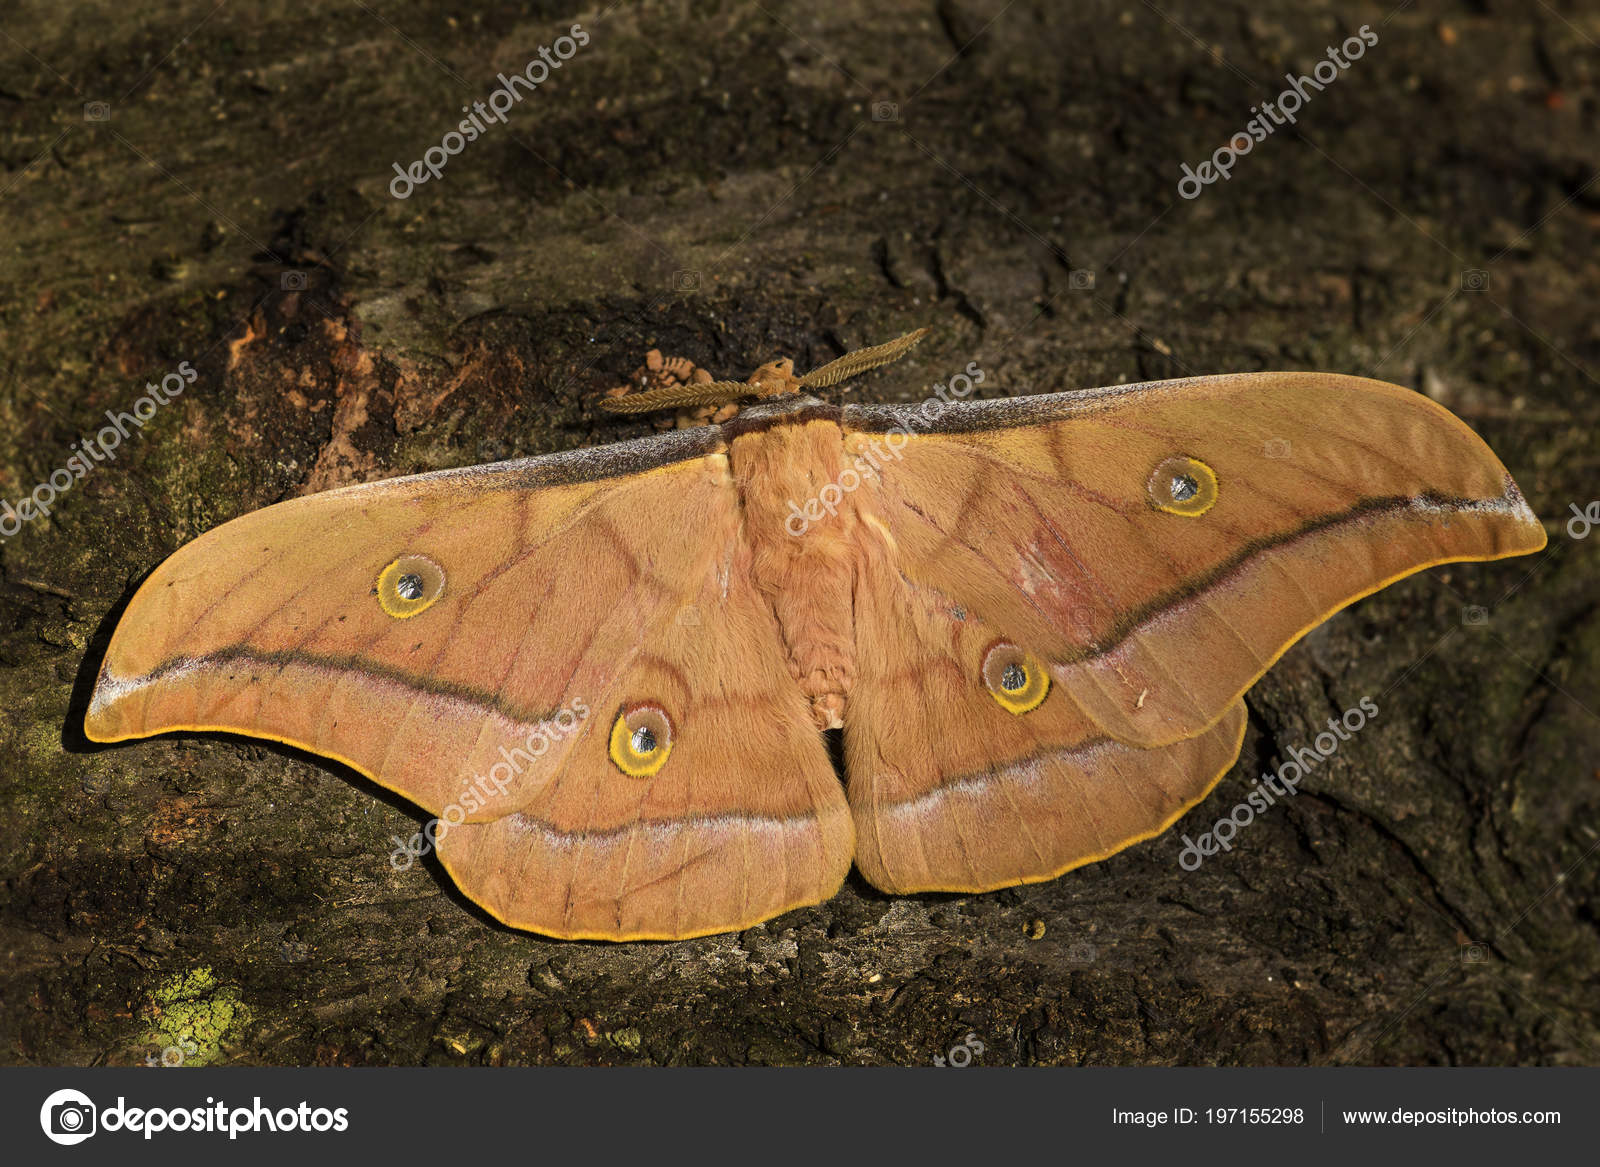 Chinese oak silk moth